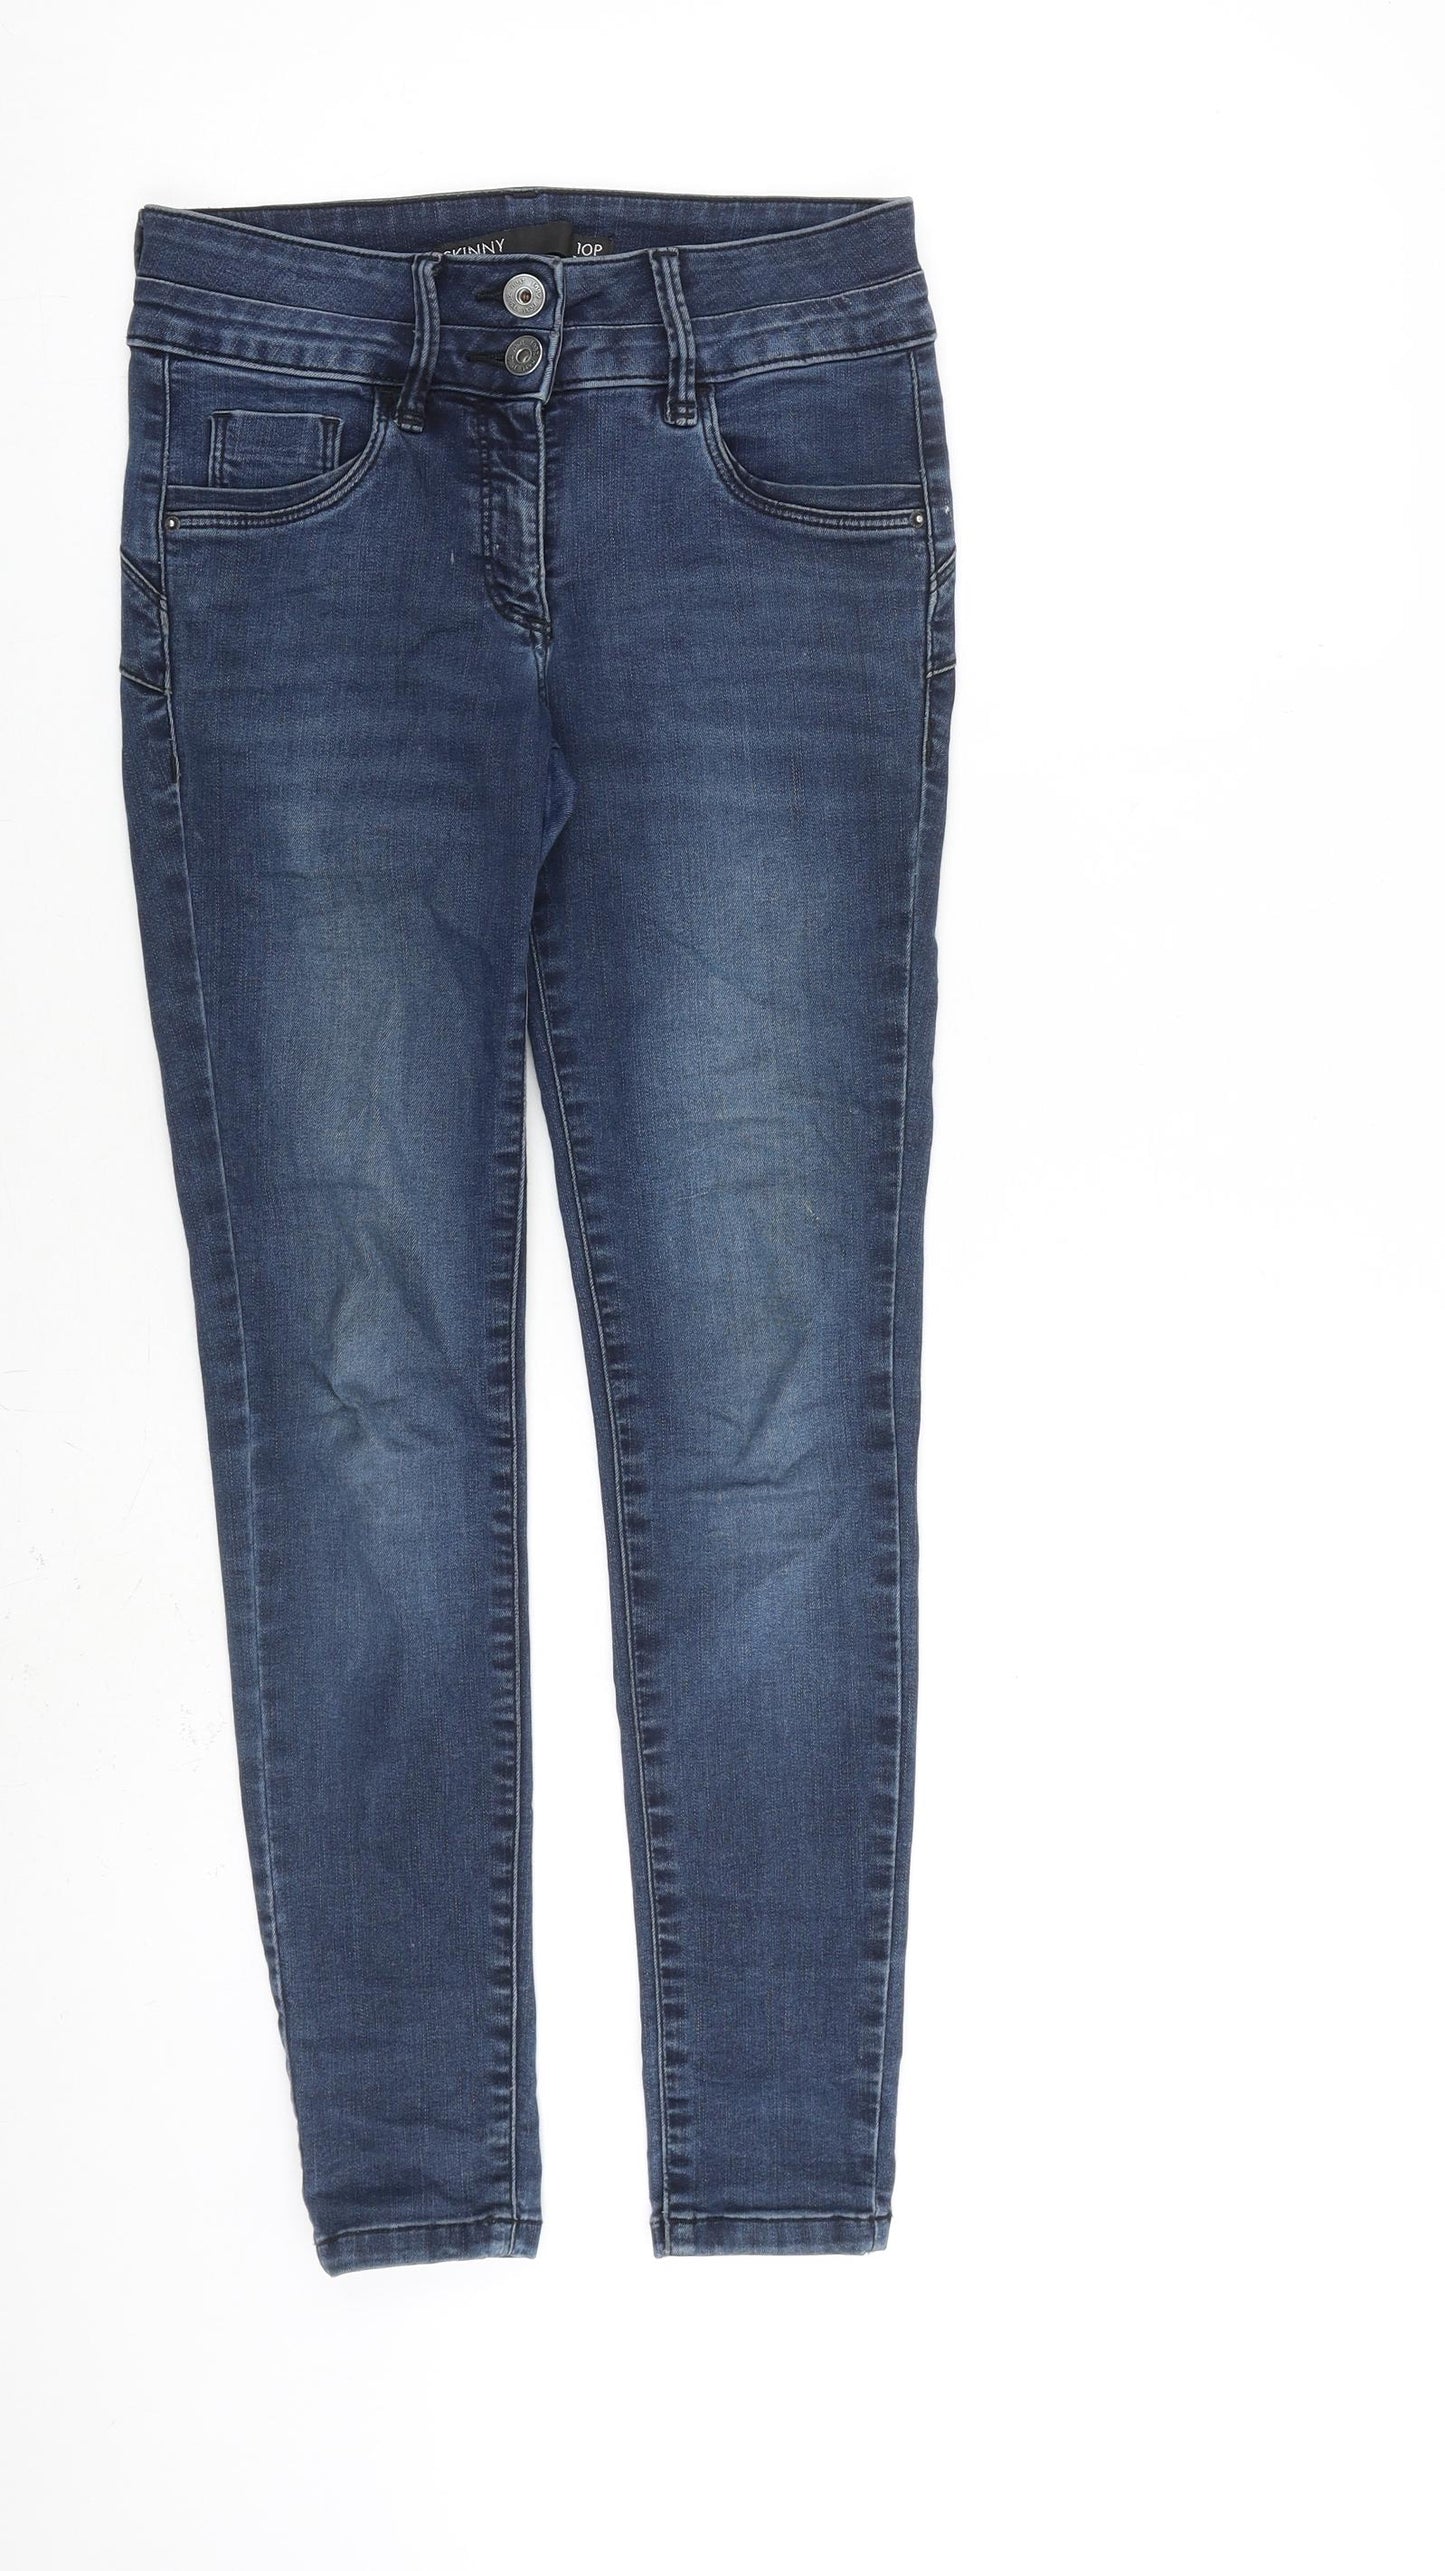 NEXT Womens Blue Cotton Skinny Jeans Size 10 L27 in Slim Zip